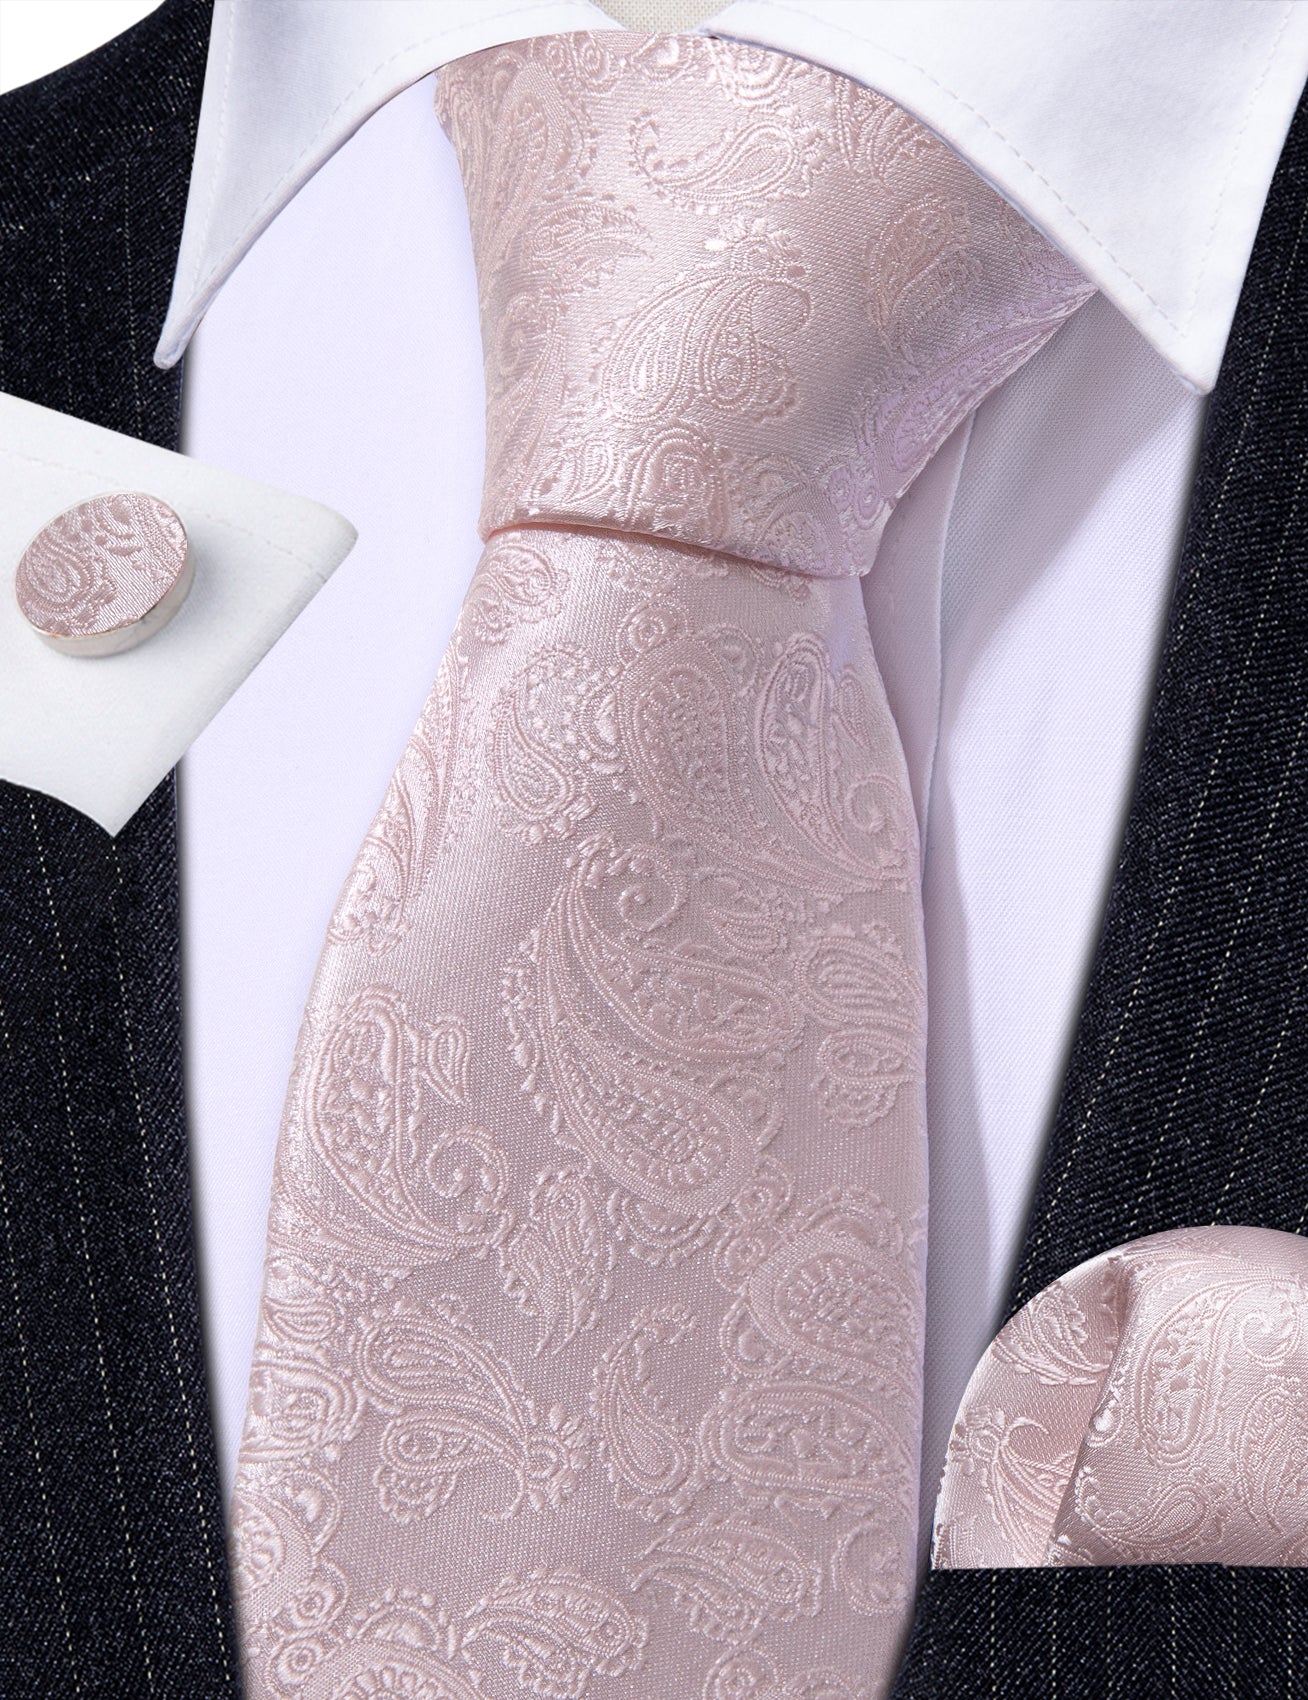 Mist Pink Paisley Silk 63 Inches Extra Long Tie Hanky Cufflinks Set